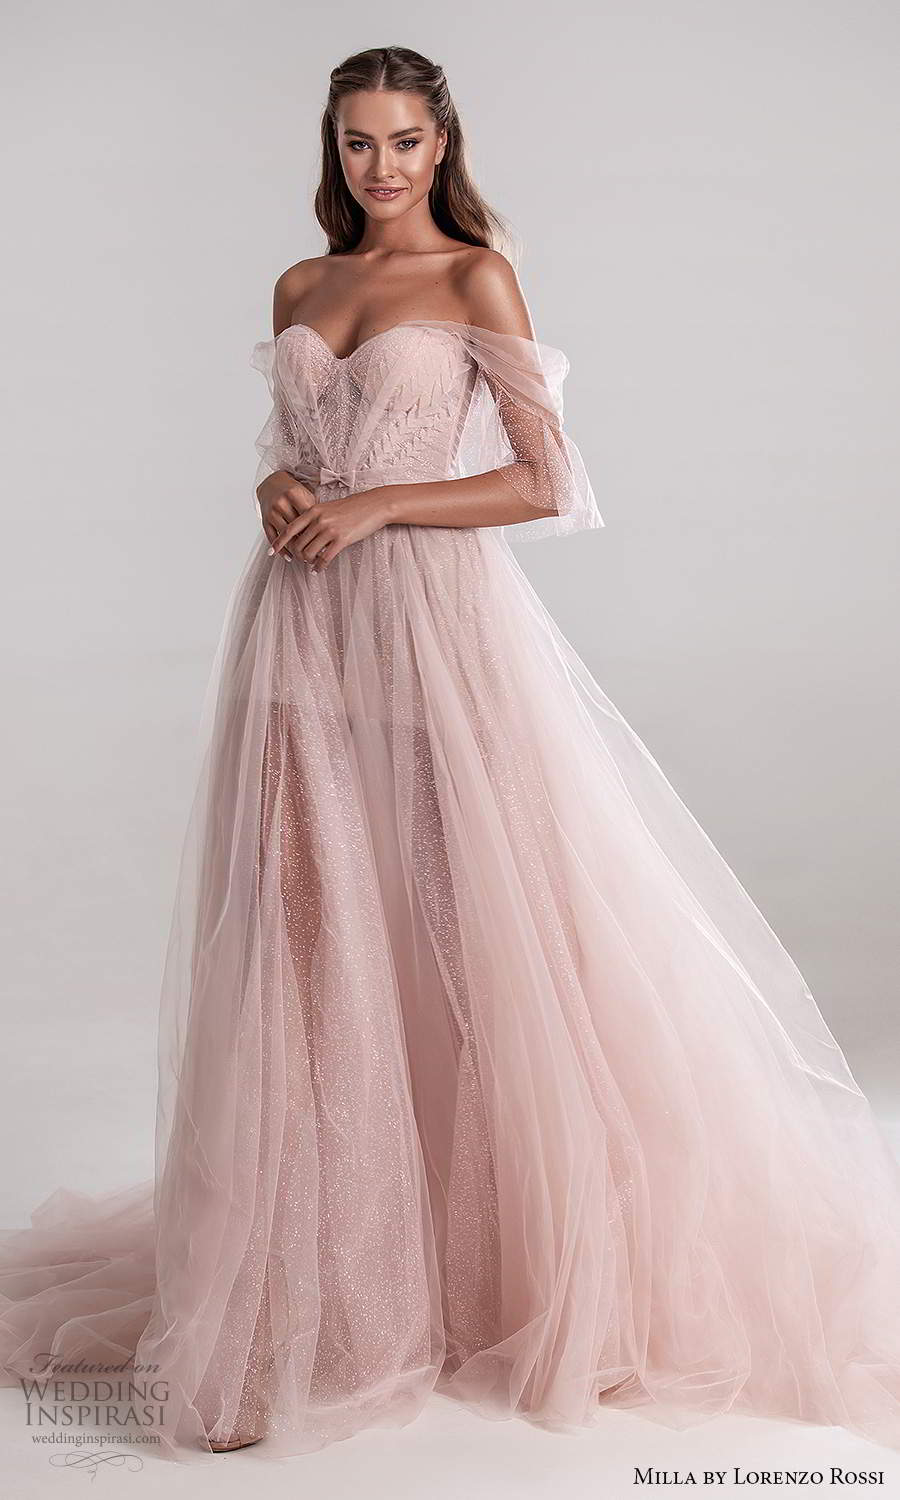 milla by lorenzo rossi 2020 rtw off shoulder illusion straps sweetheart neckline corset bodice a line ball gown wedding dress blush pink chapel train (4) mv